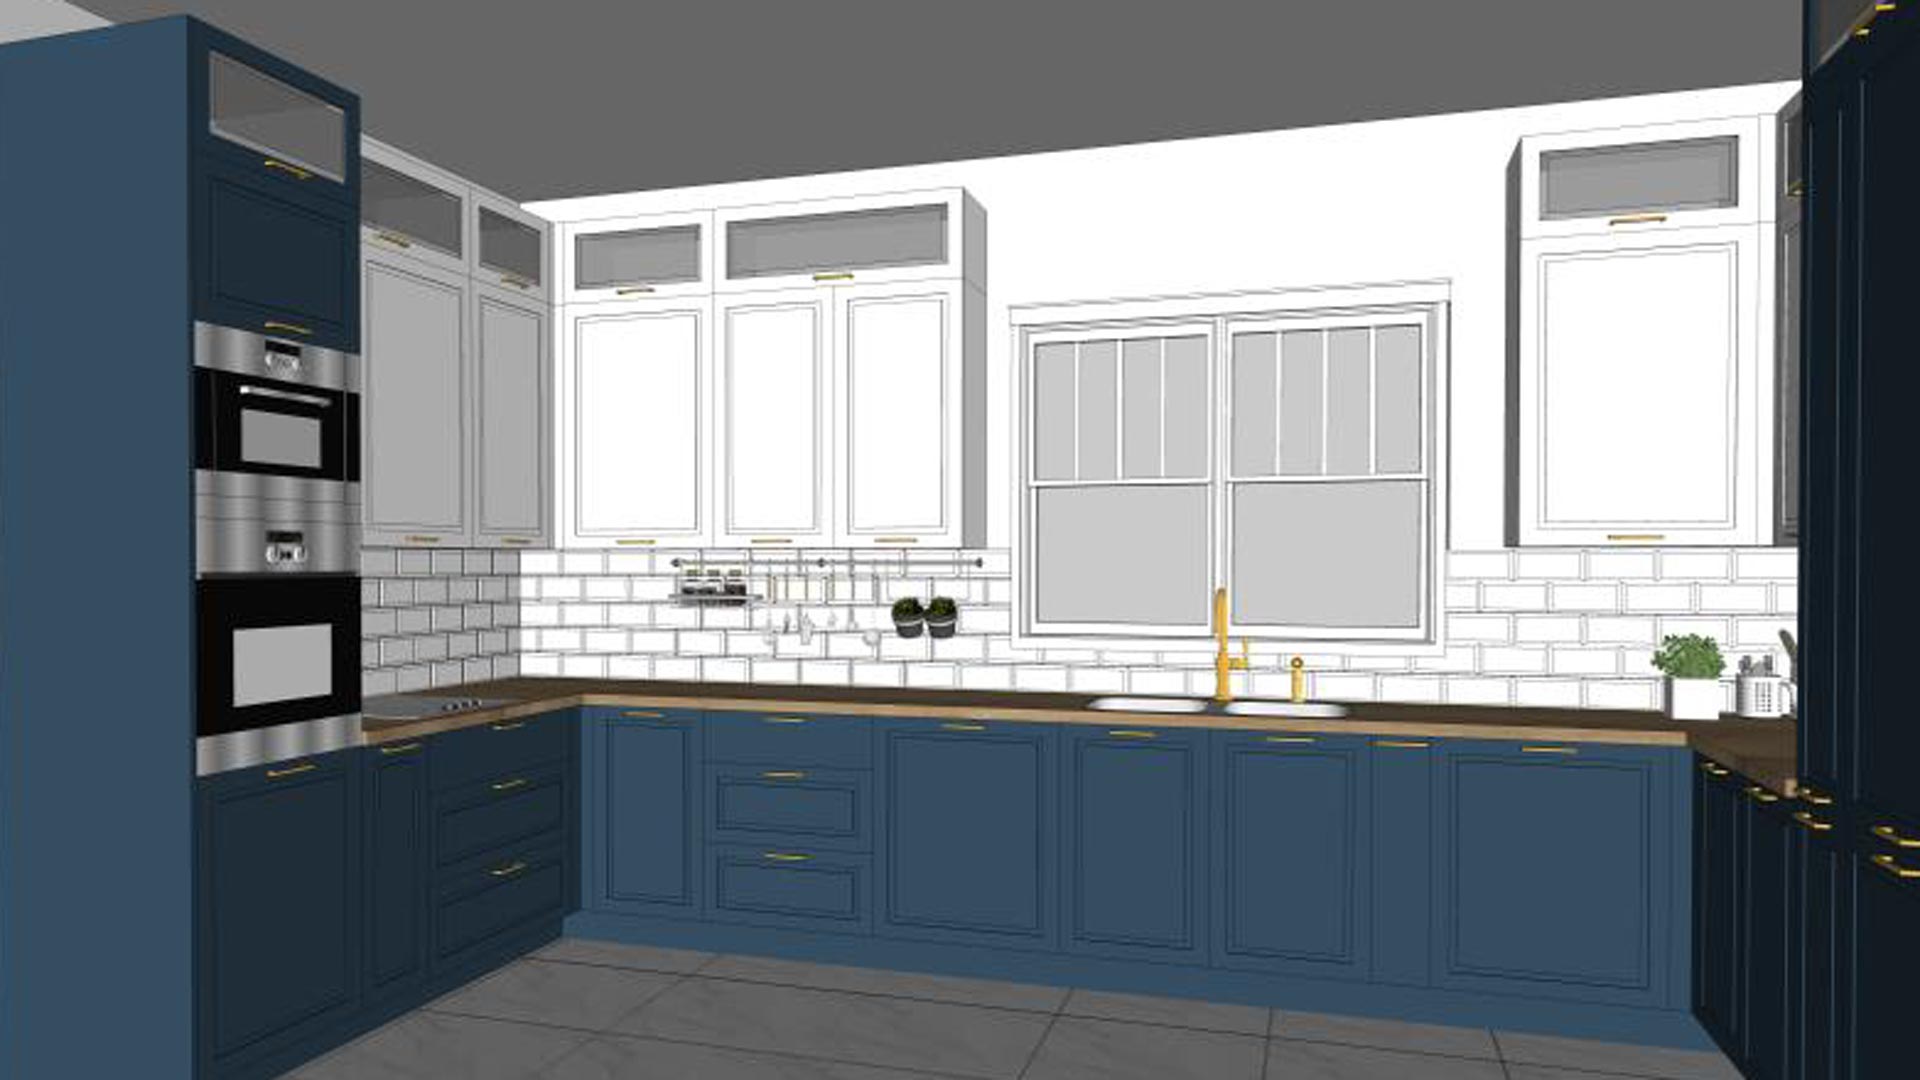 Kitchen architecture and design